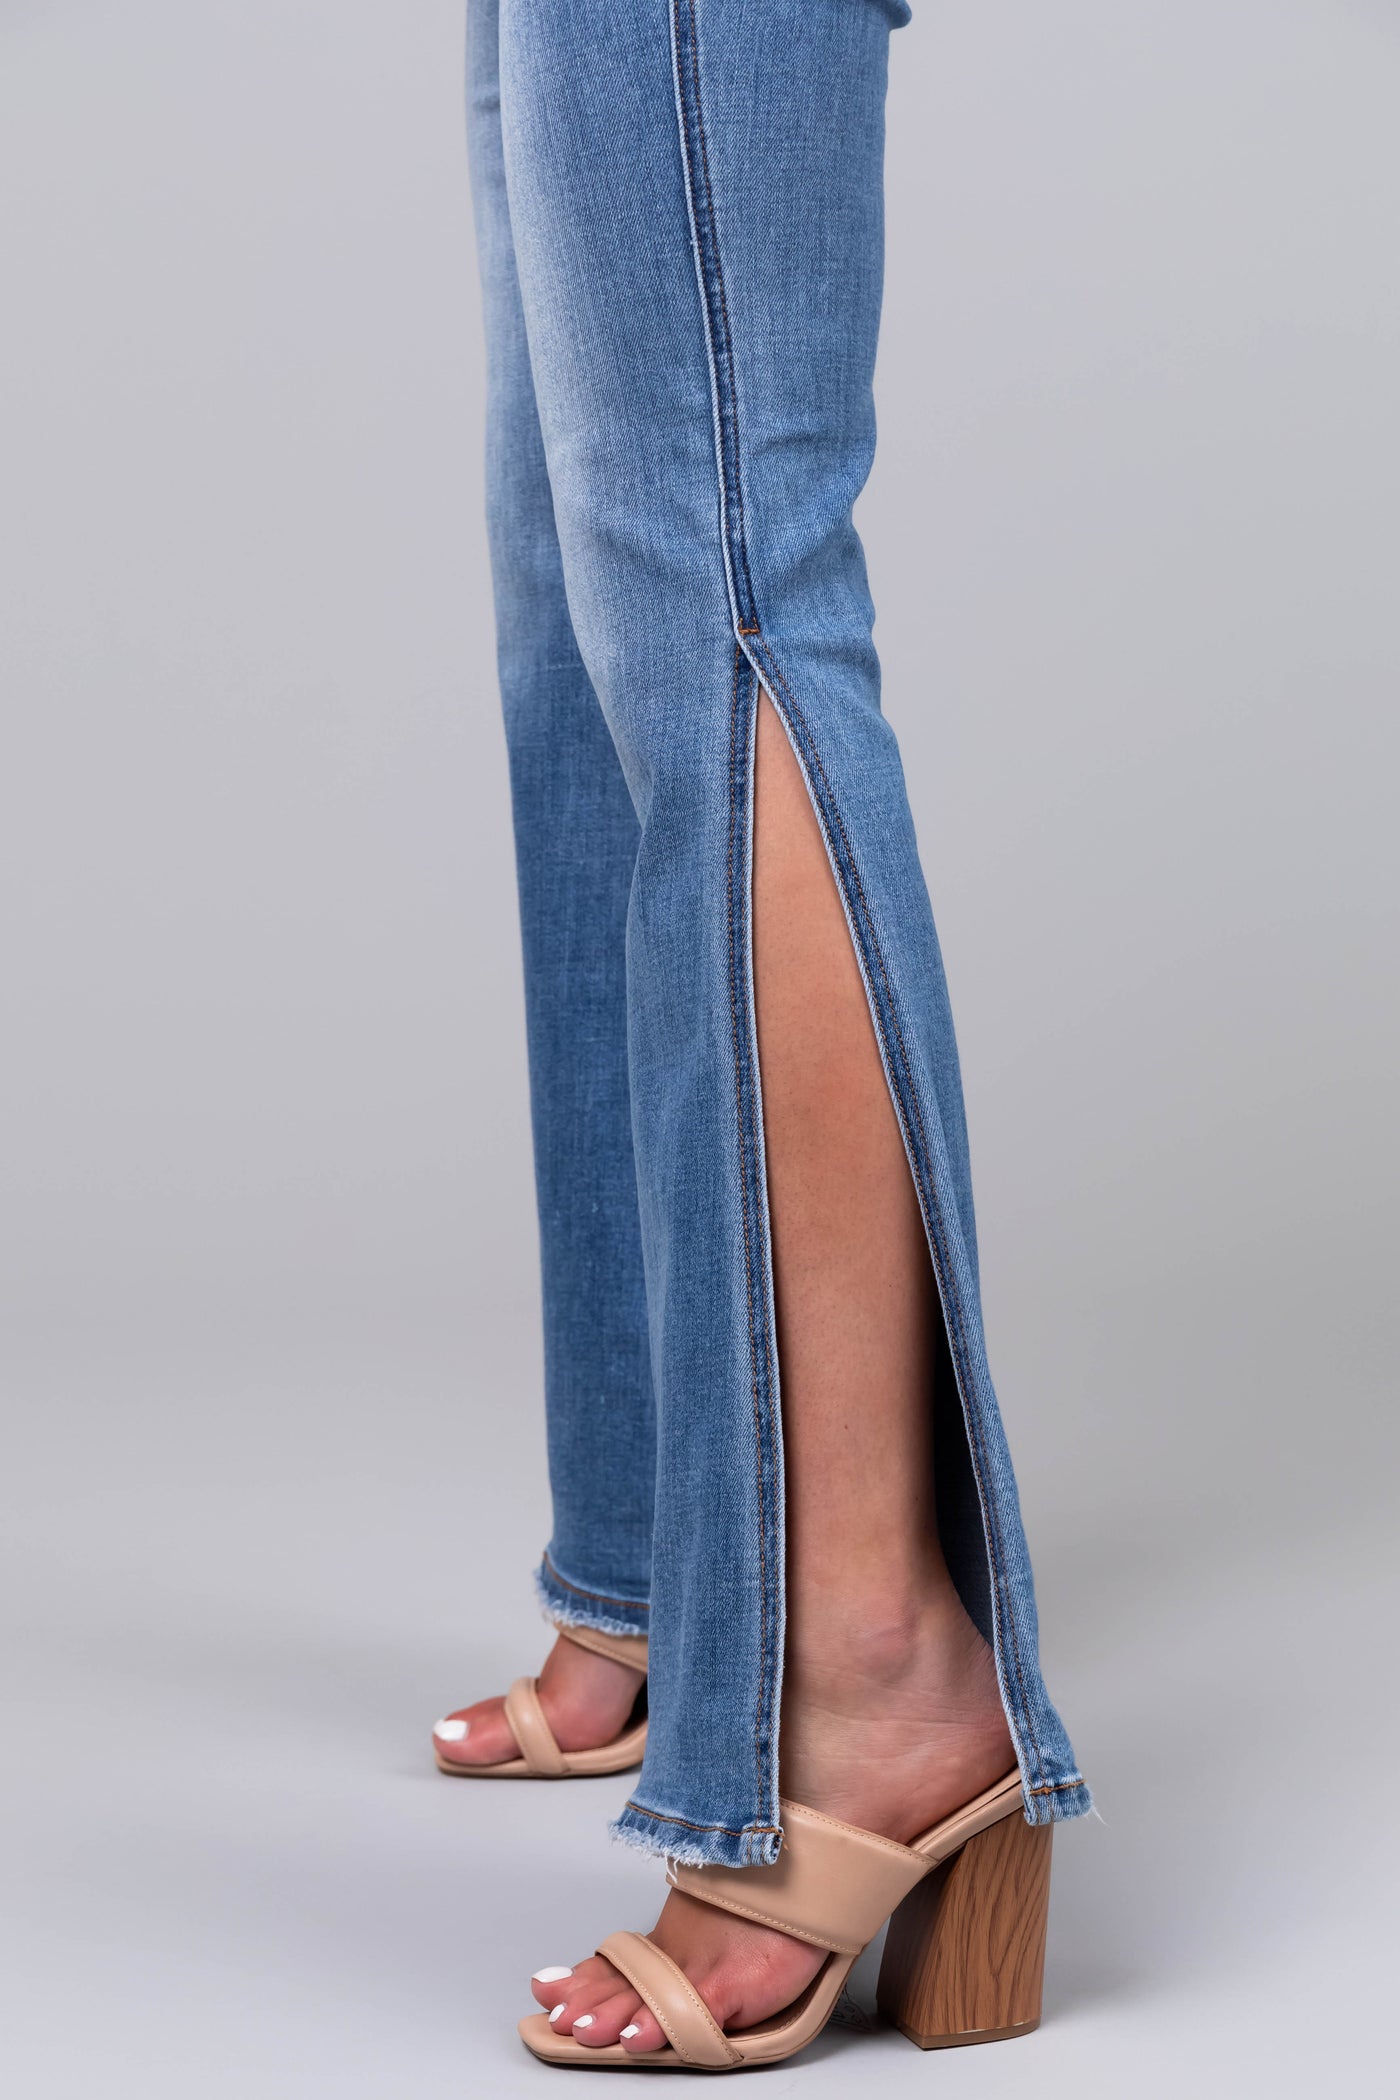 Judy Blue Medium Wash Flare Leg Slit Jeans